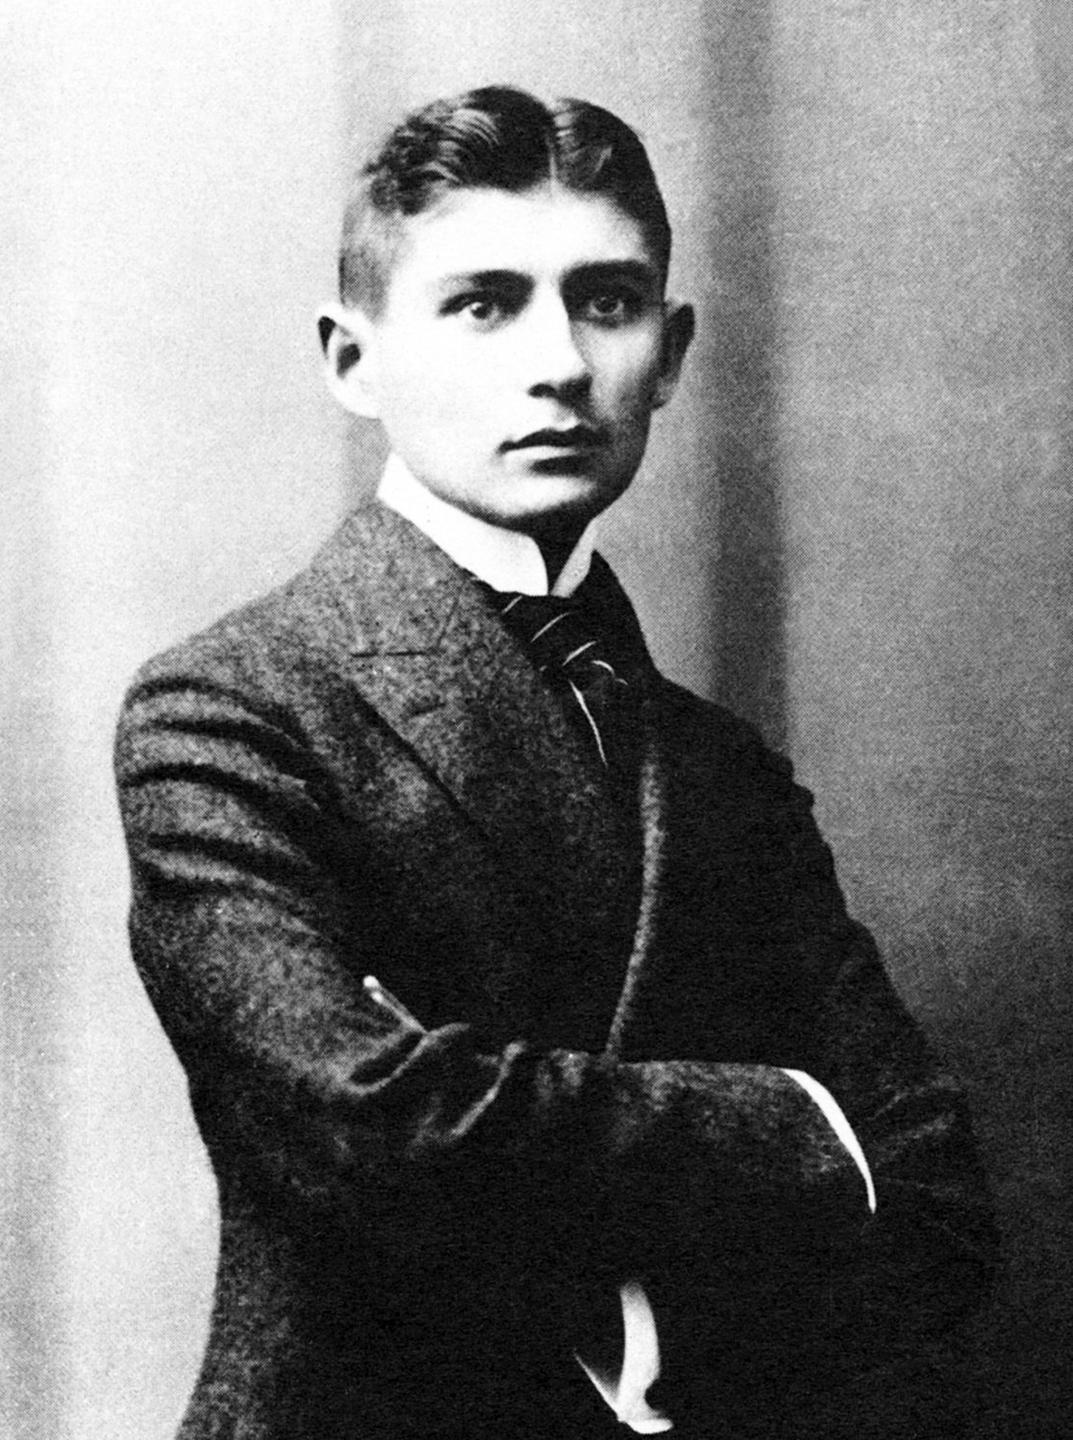 Der Schriftsteller Franz Kafka im Porträt.